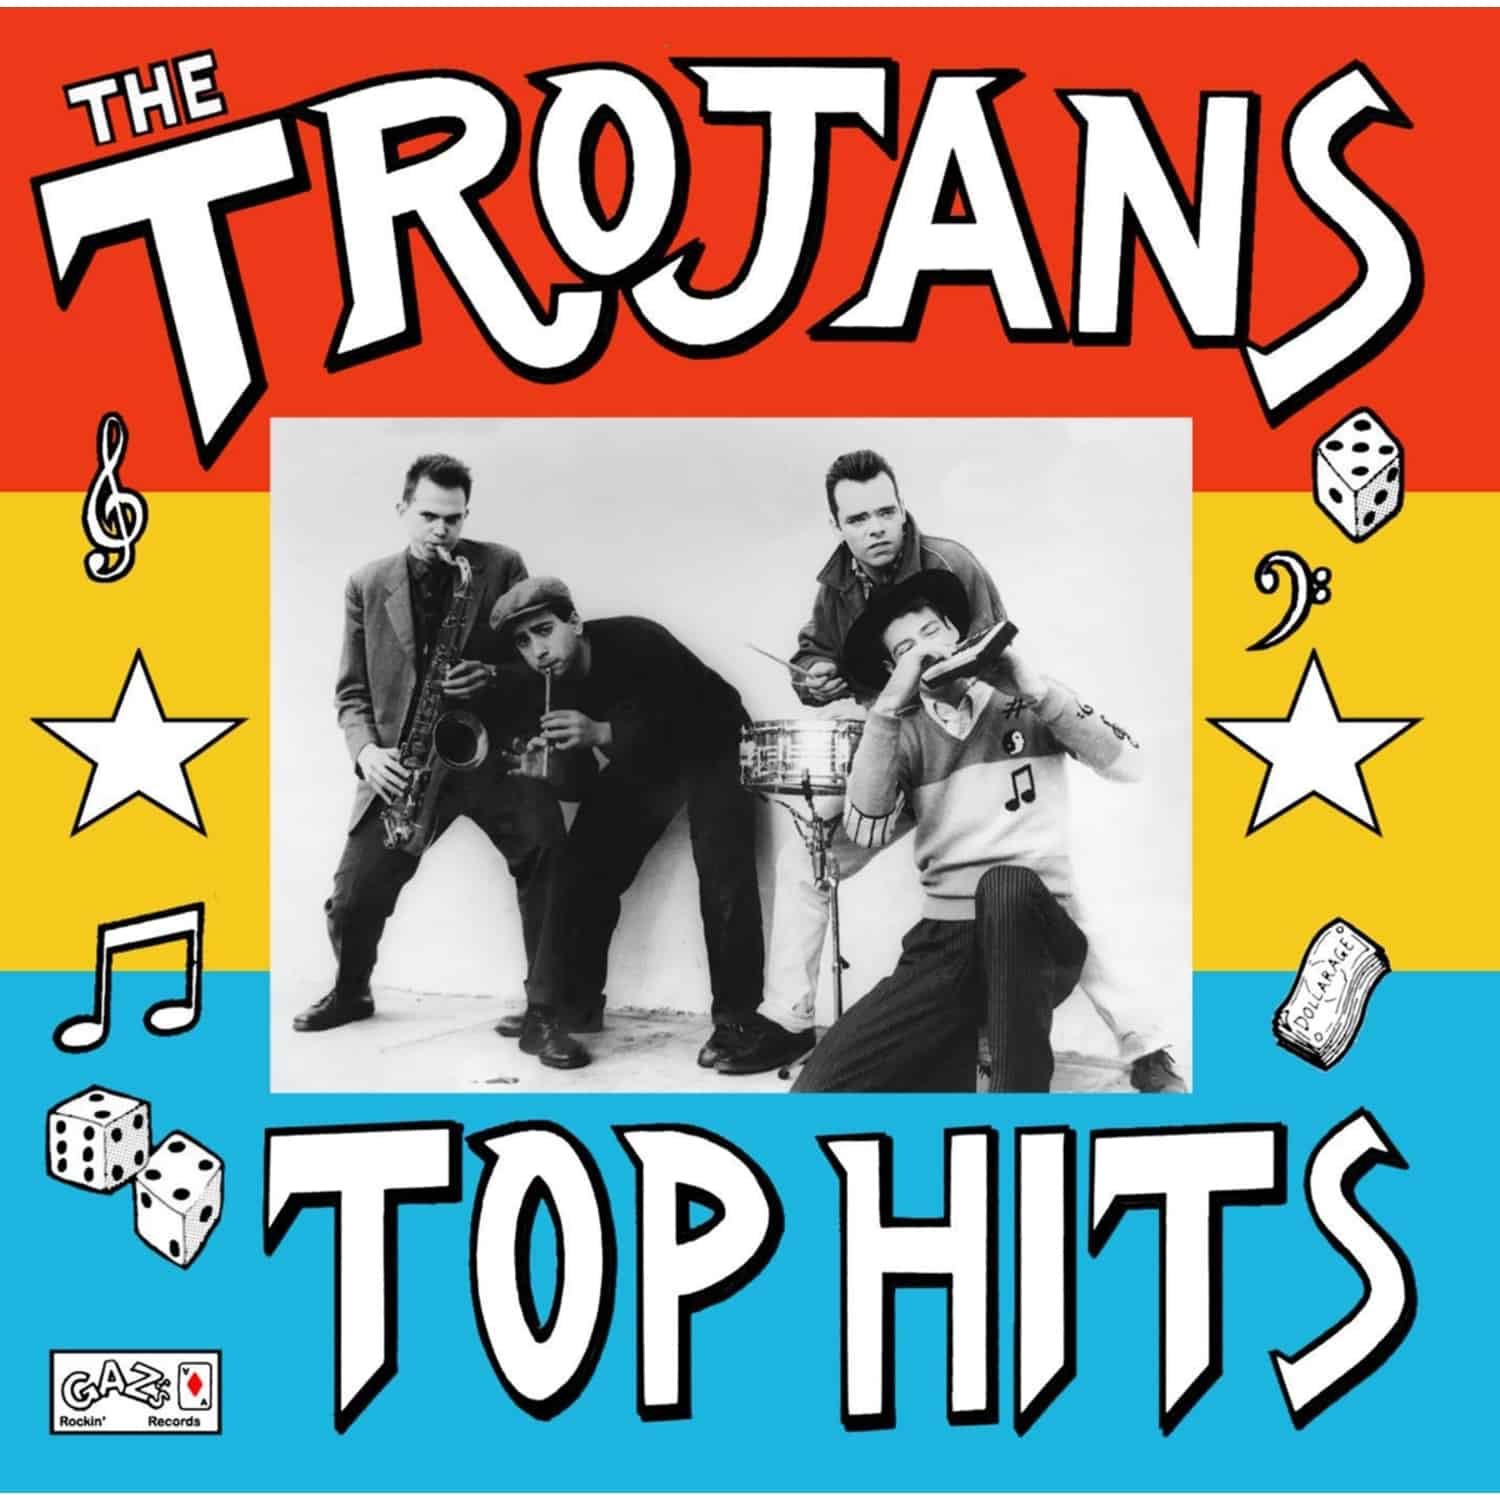 The Trojans - TOP HITS 